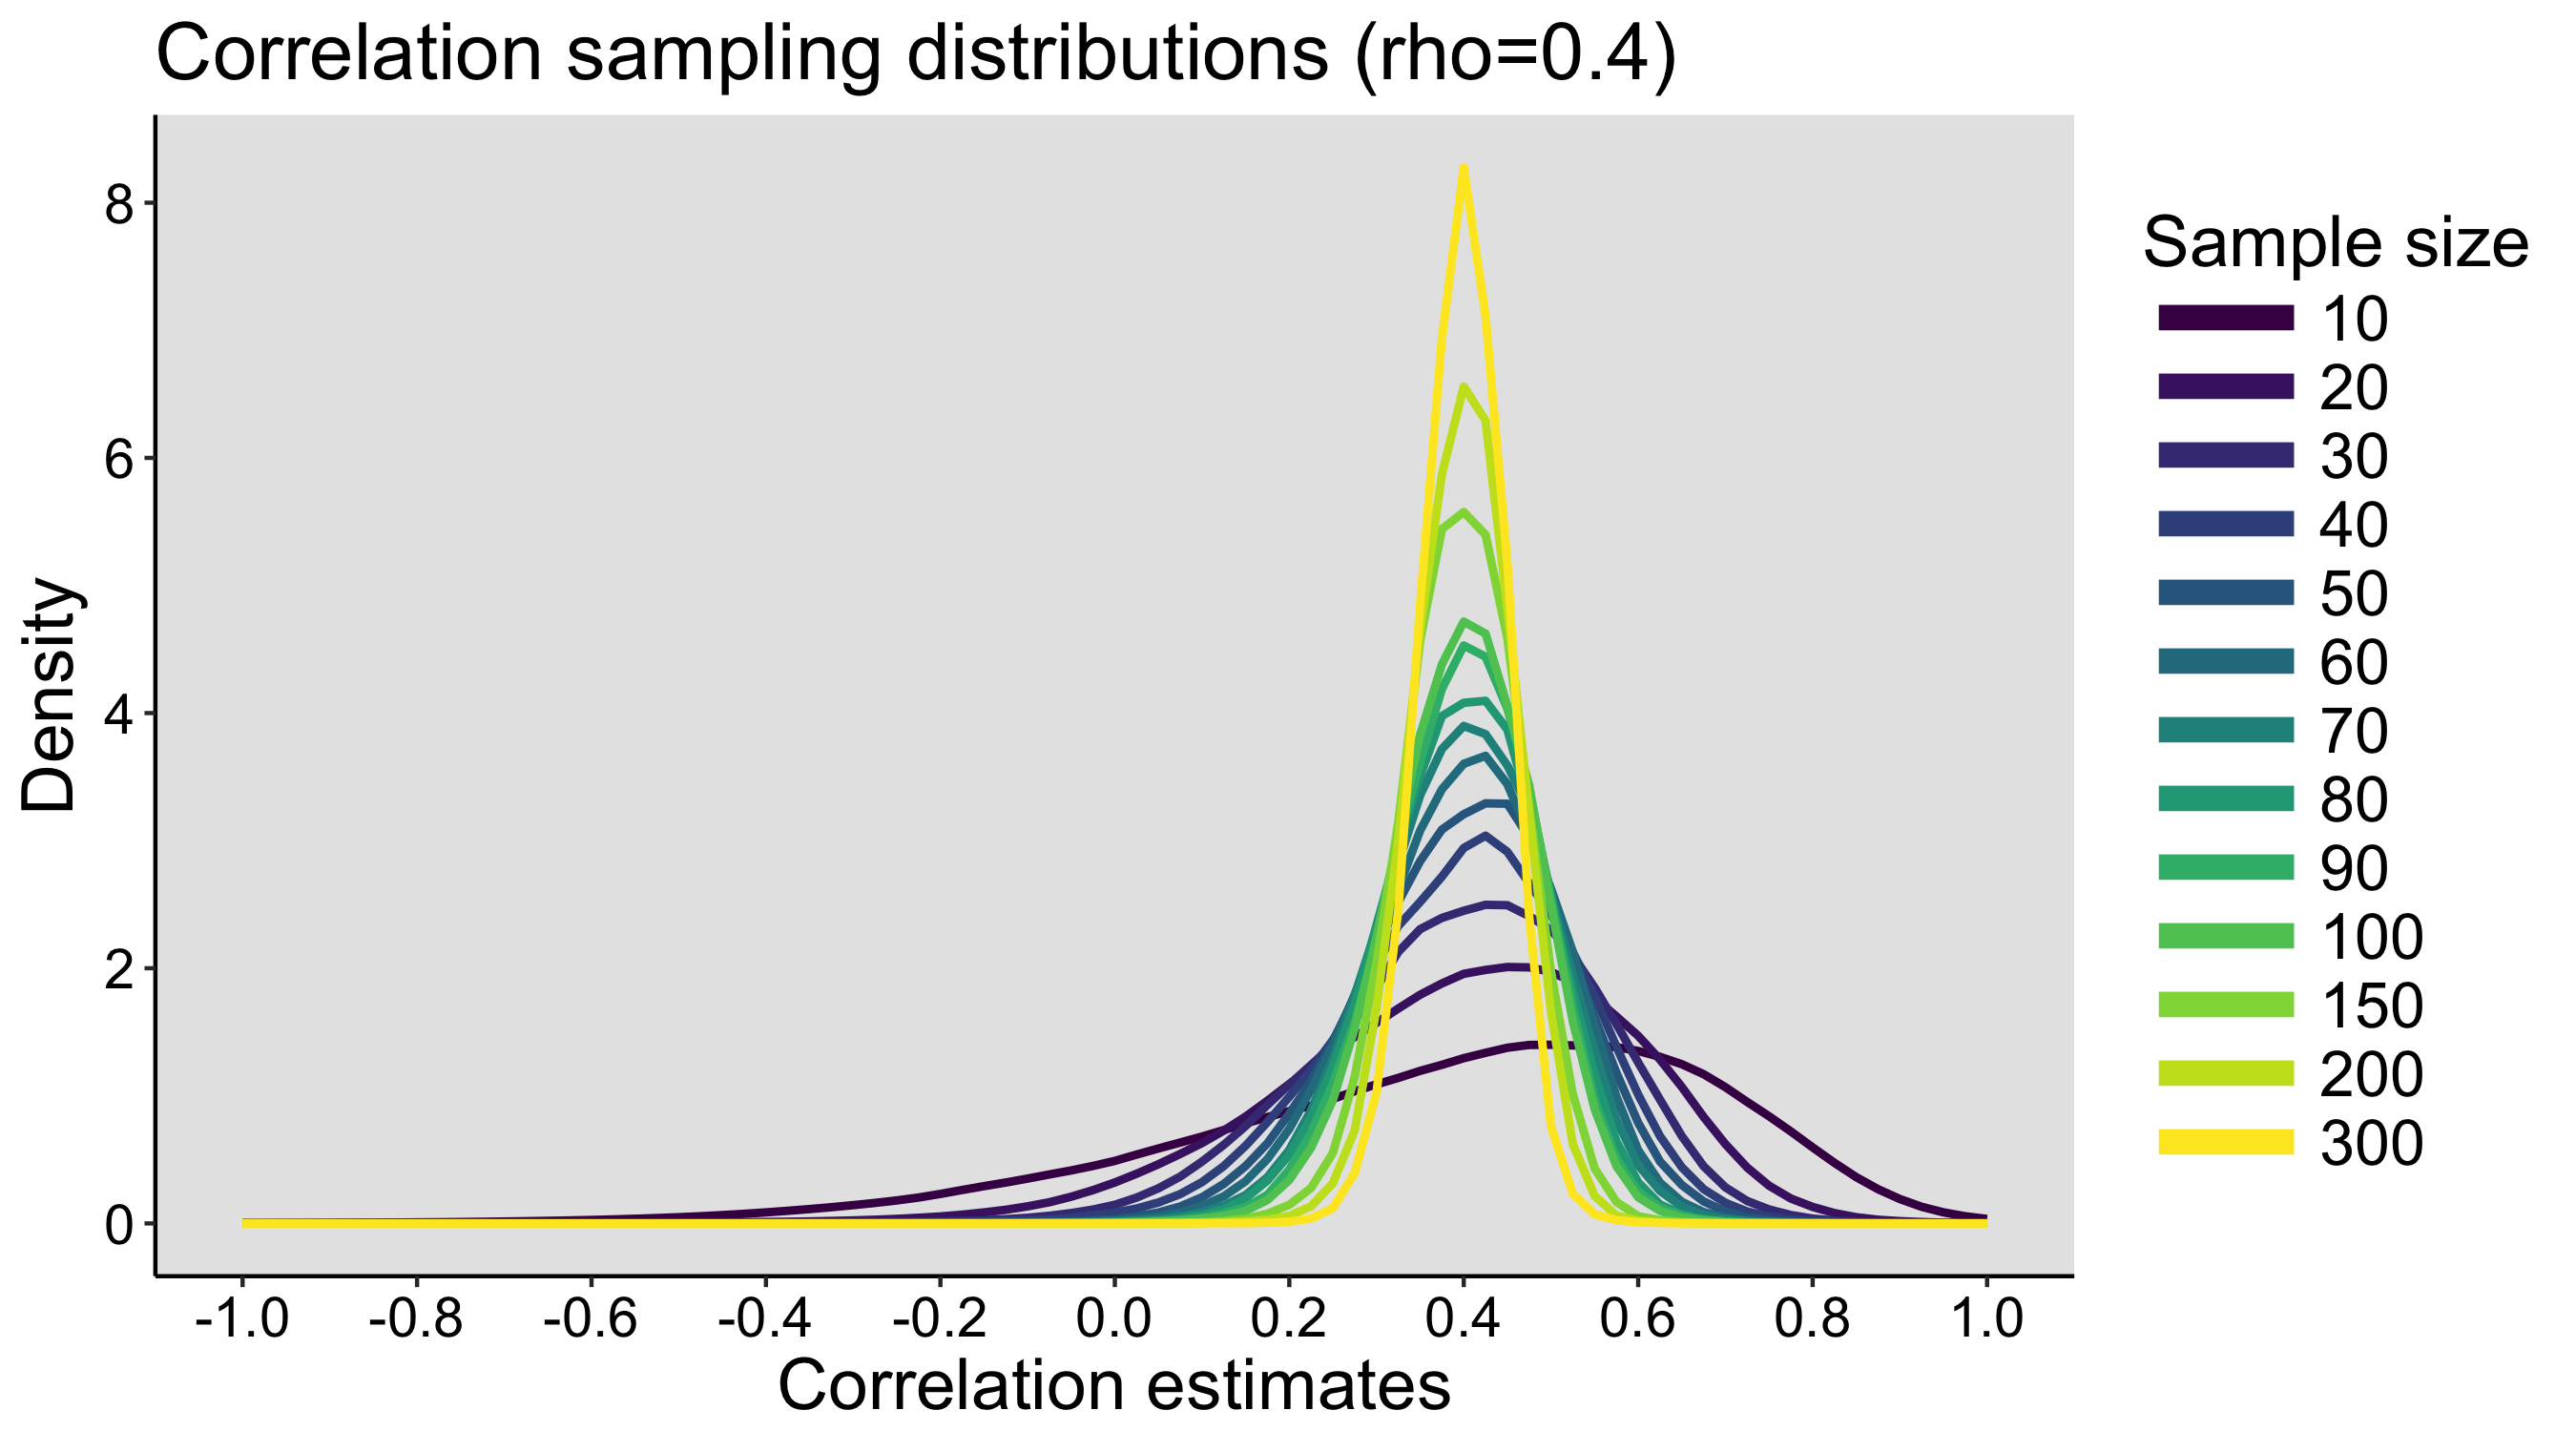 figure_sampling_distributions_rho04